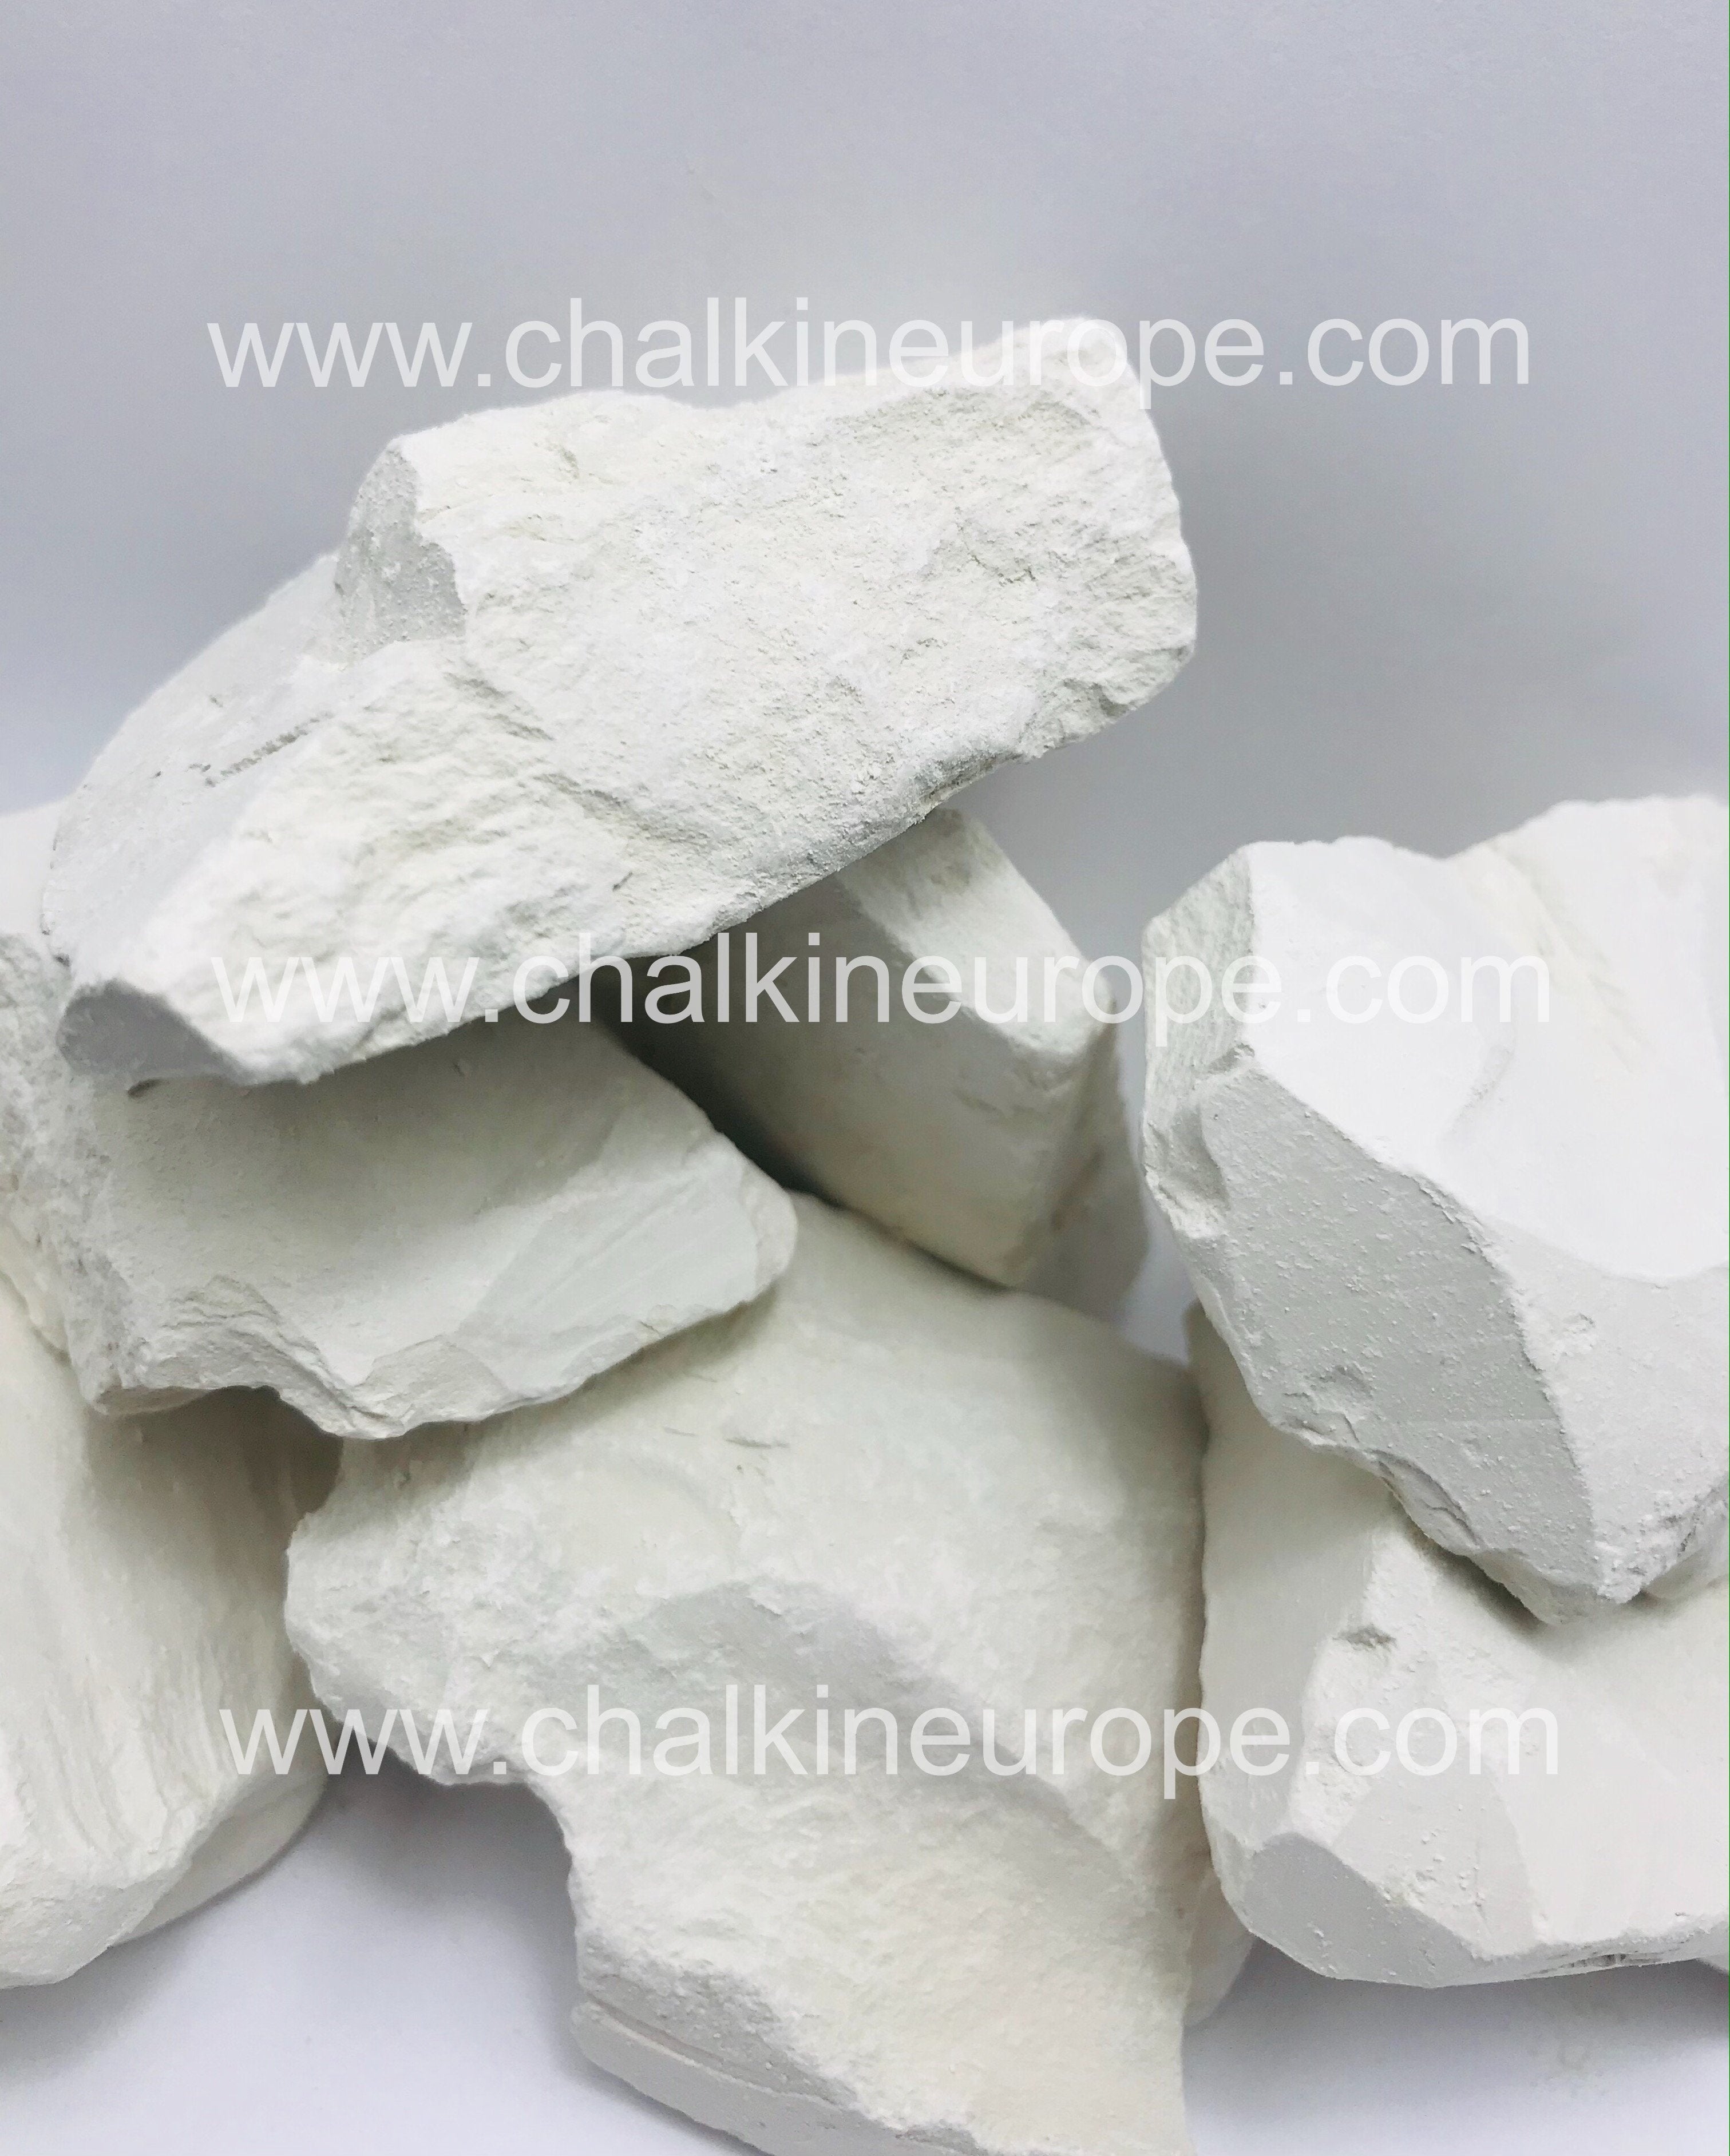 White Mountain Chalk Powder – Earth's Clay Store